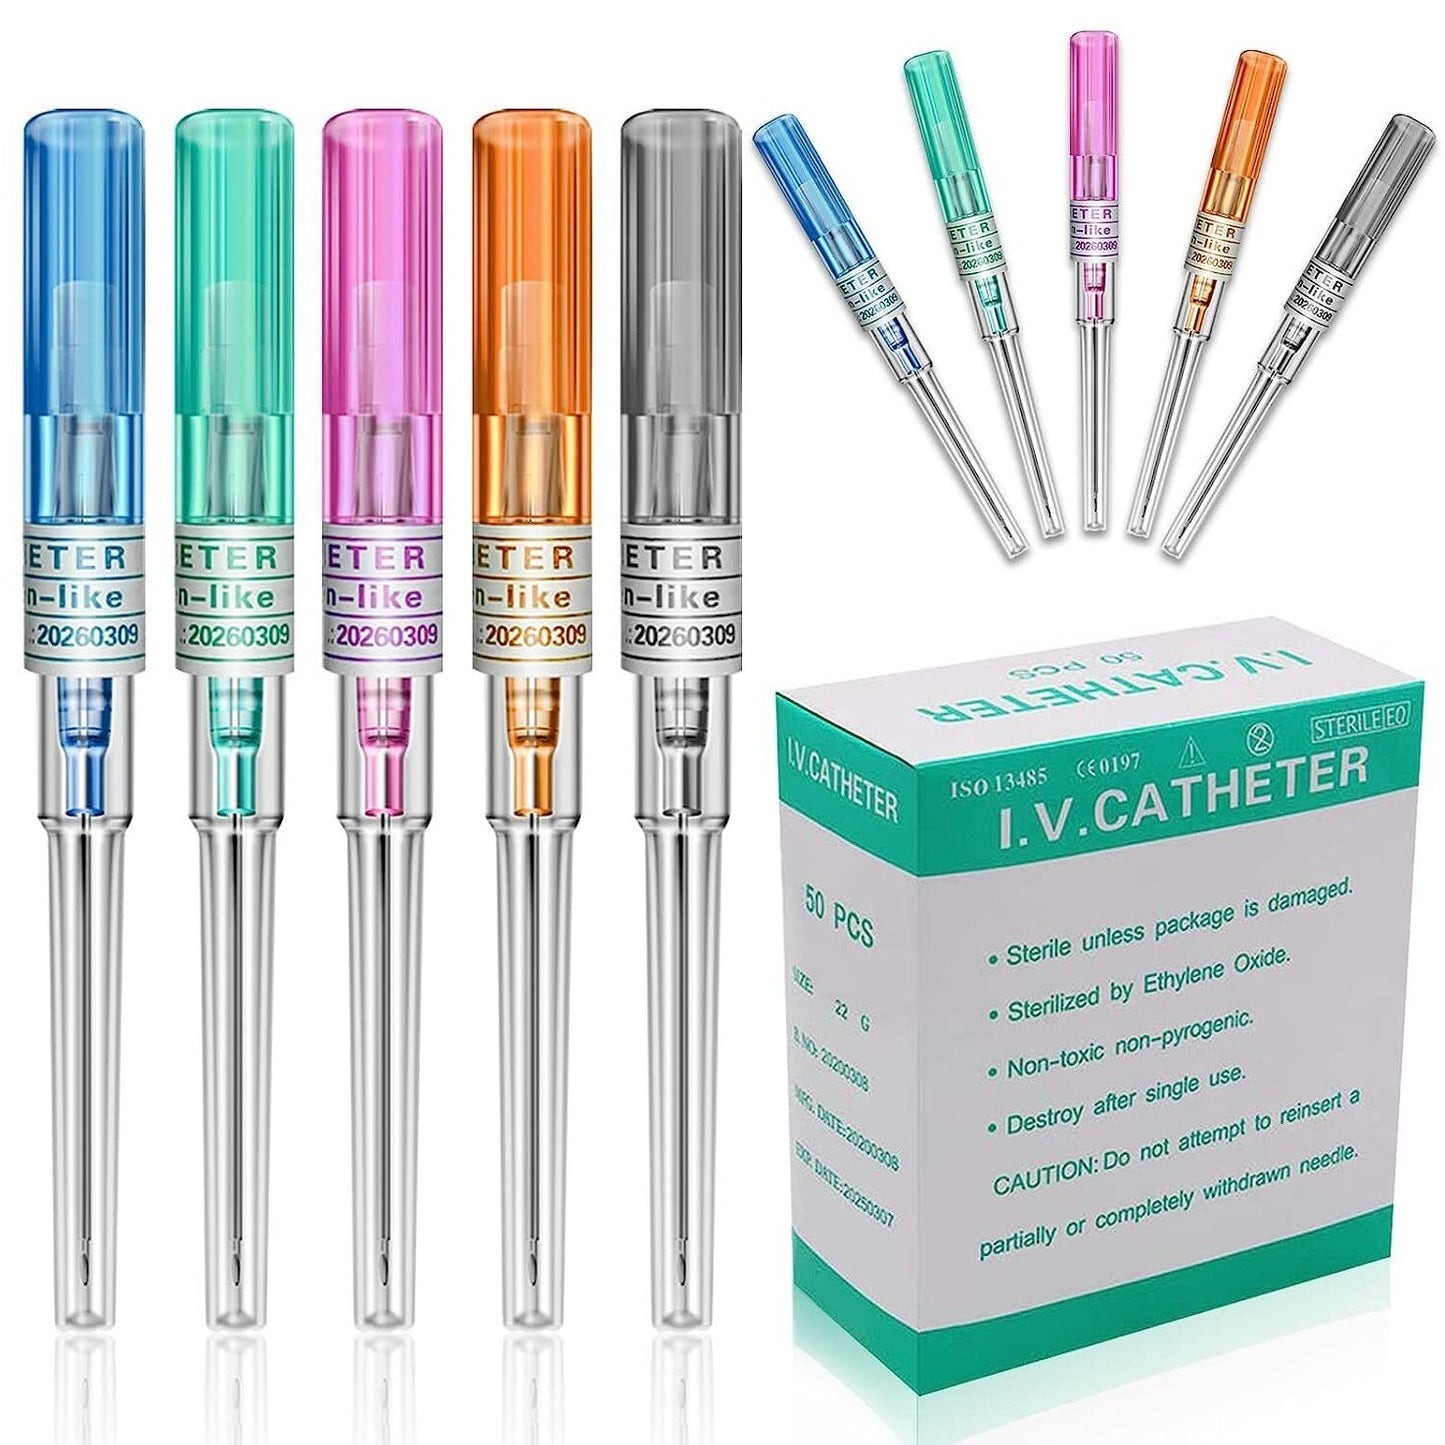 Cannula Catheter Piercing Needle